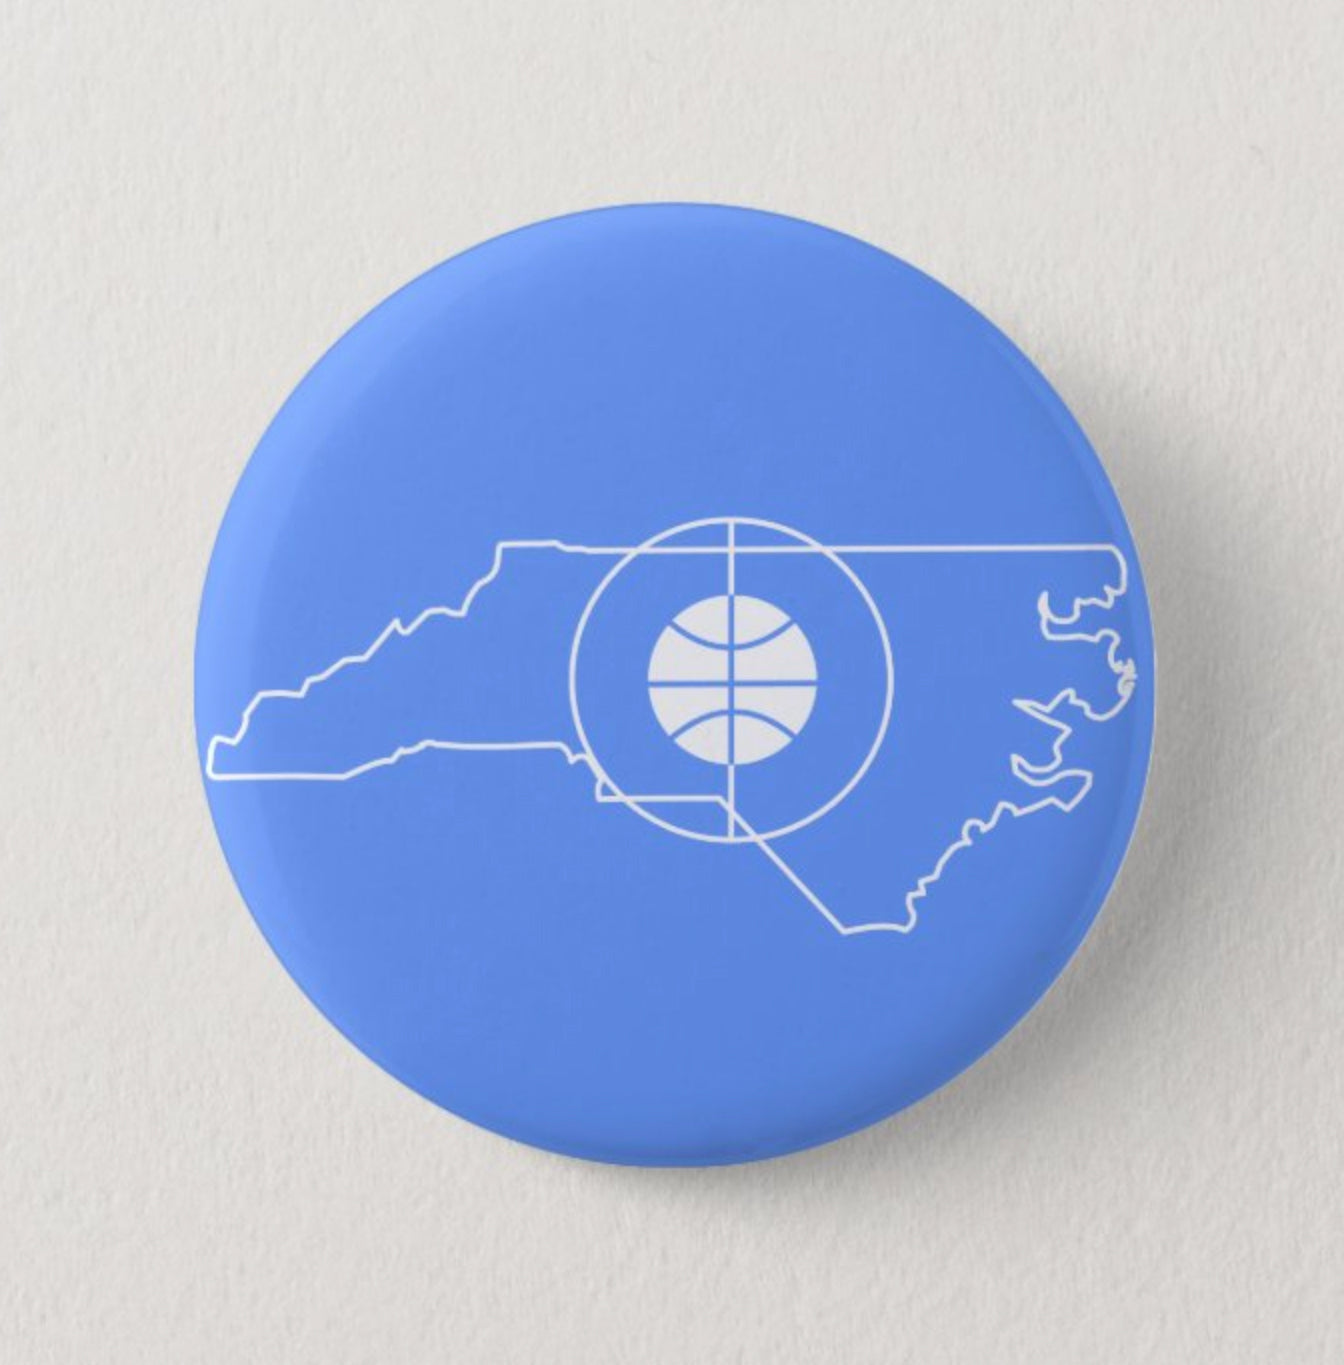 UNC Basketball Court Button Pin in Carolina Blue by Shrunken Head Brand